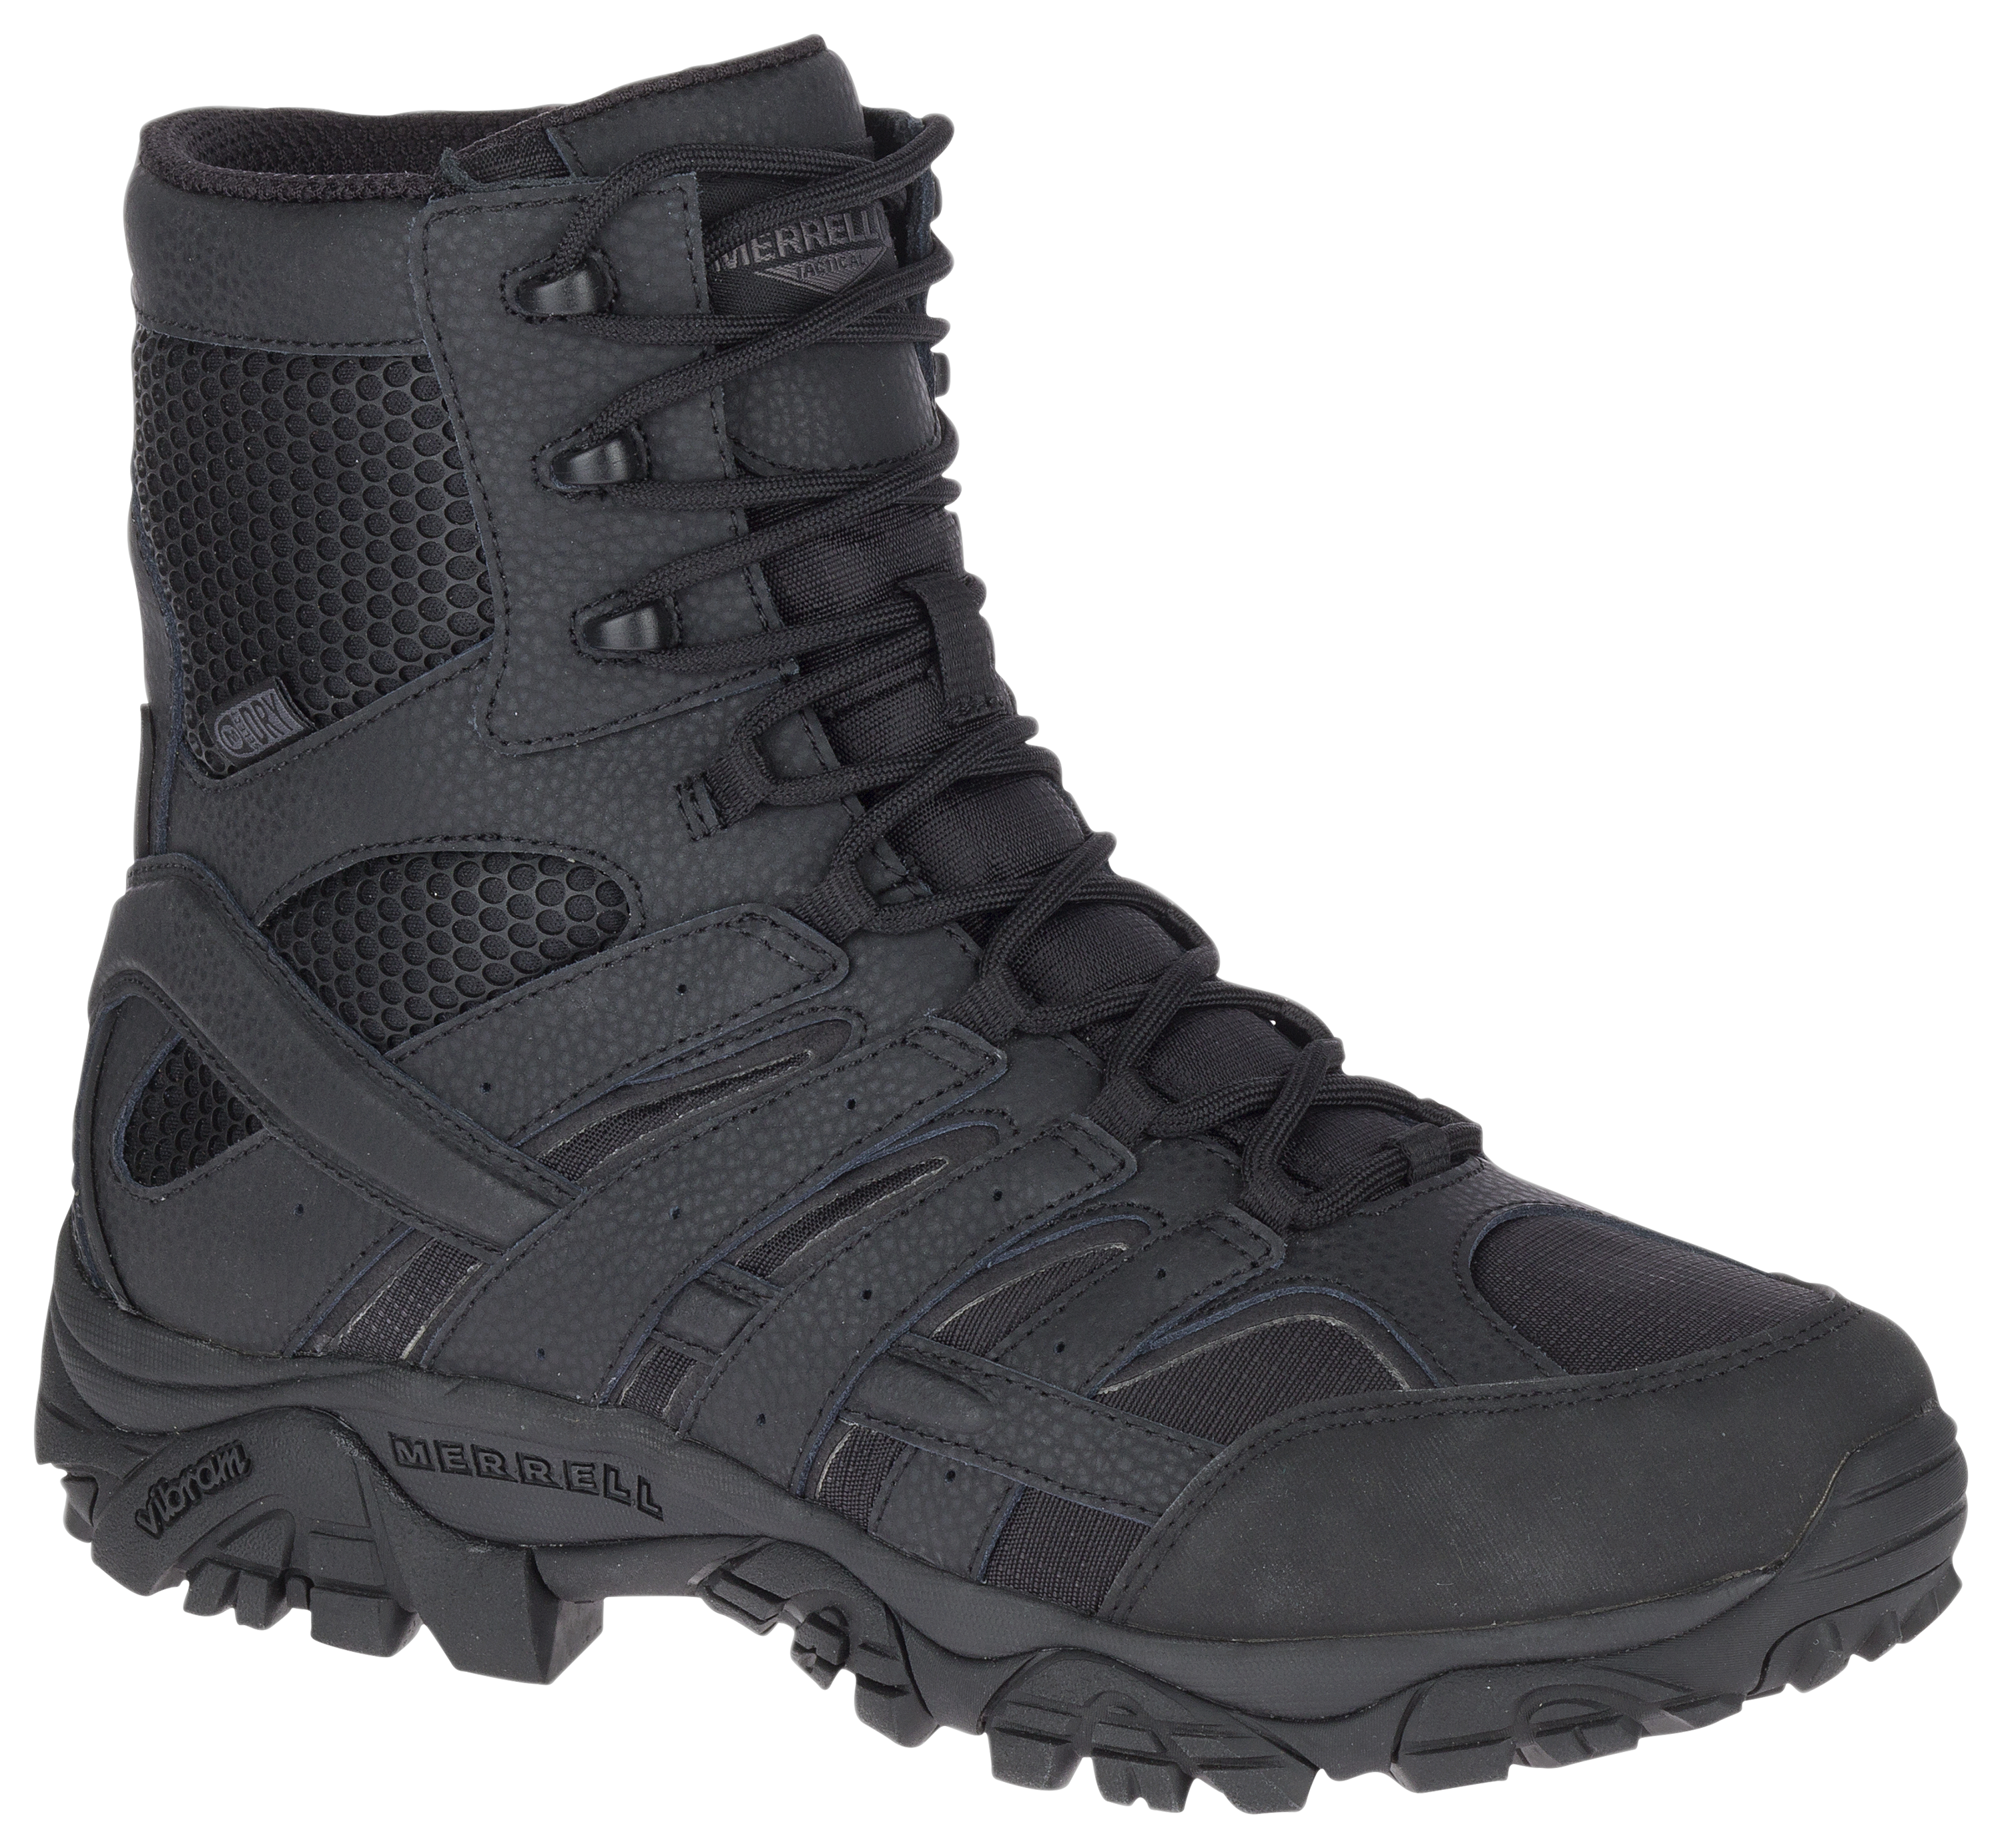 Merrell Moab 2 Waterproof Tactical Boots for Men - Black - 11M